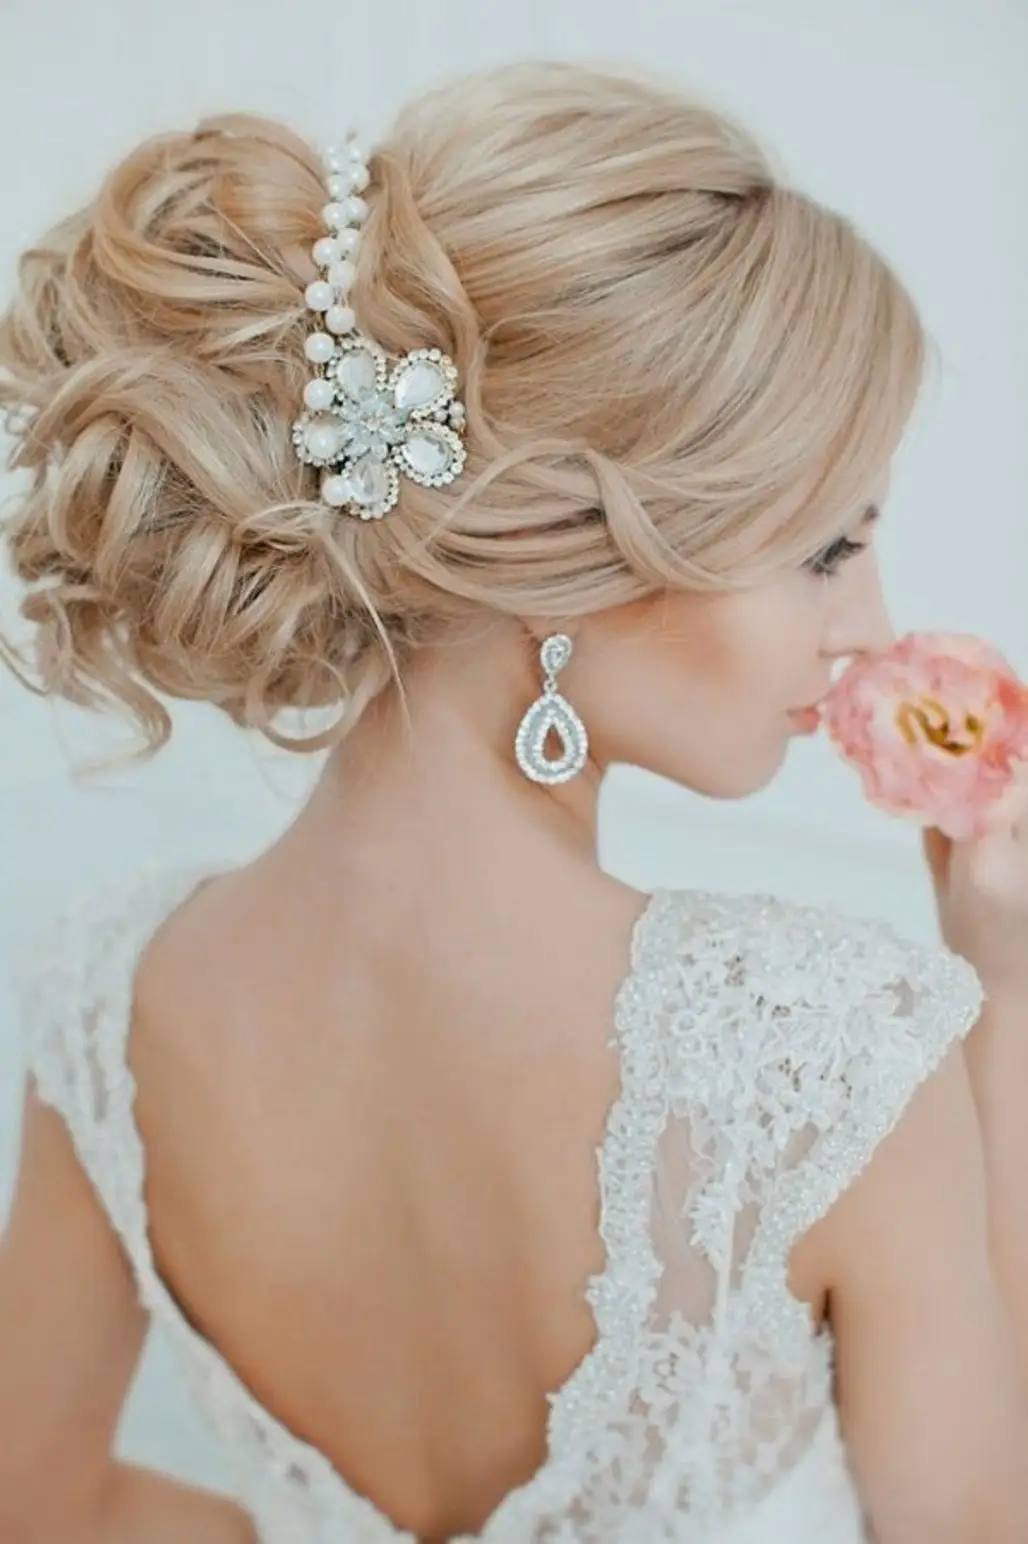 hair,bridal accessory,bride,clothing,bridal veil,